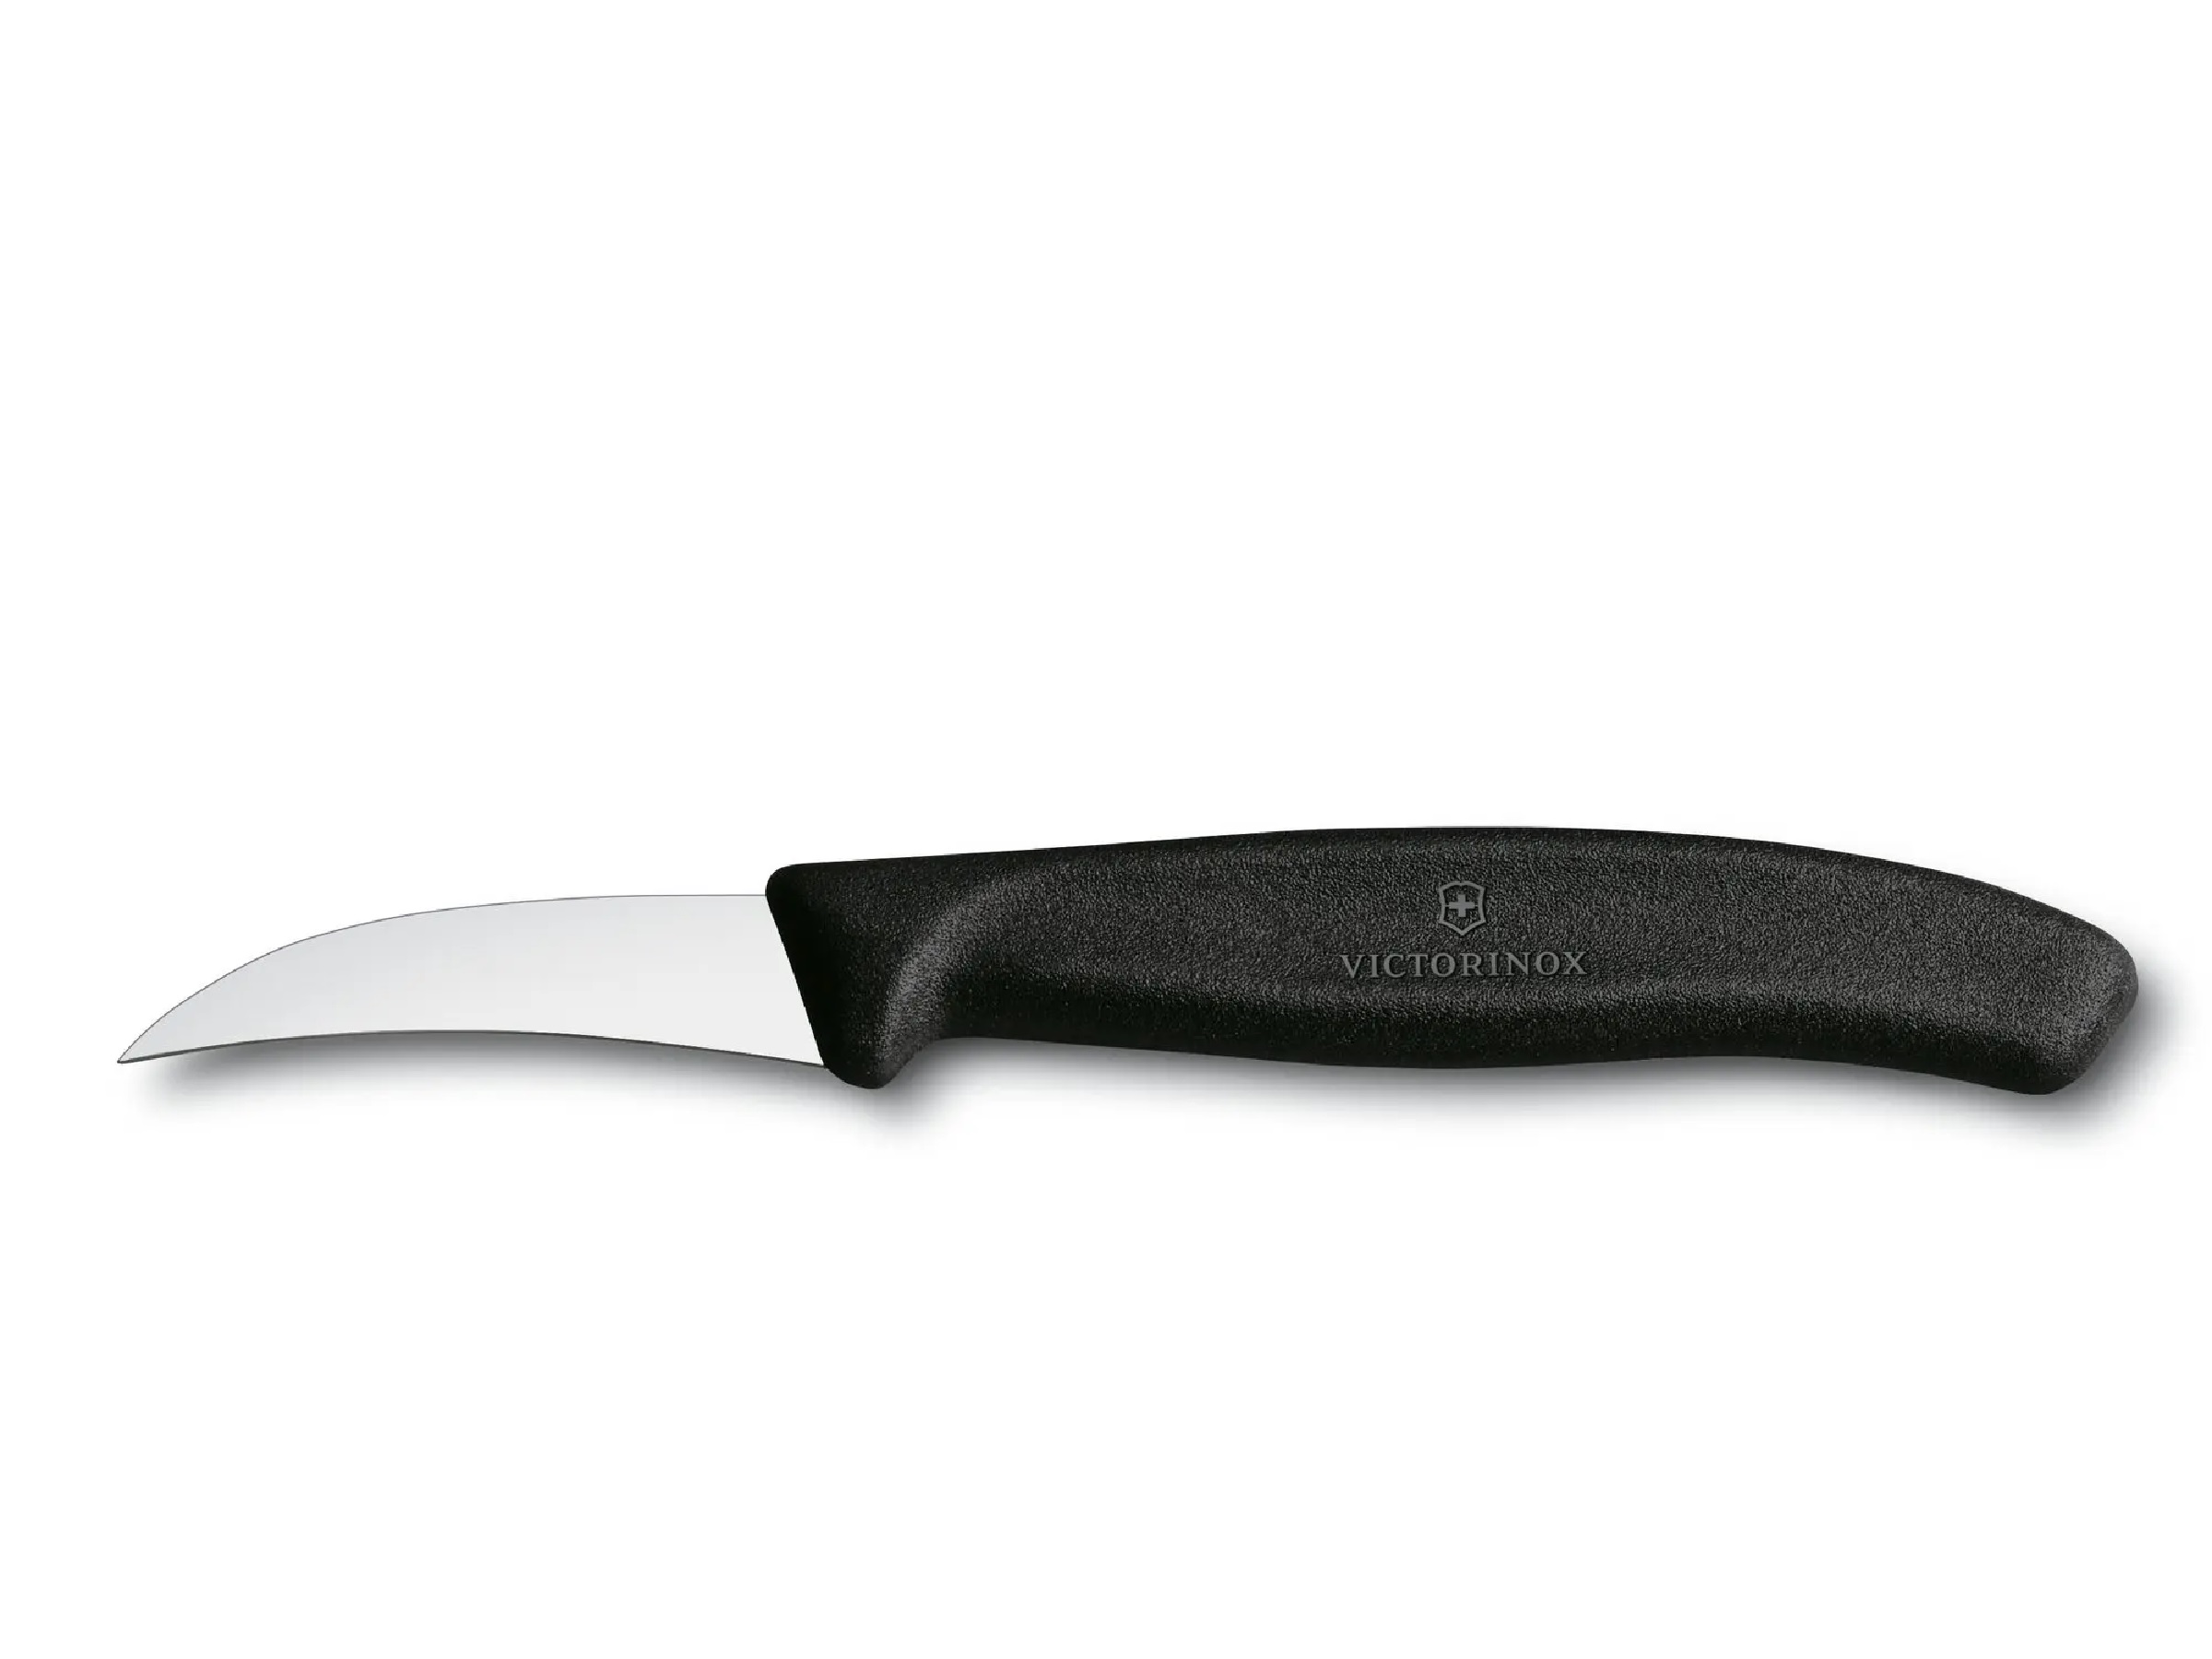 Victorinox Swiss Classic Paring Knife in black - 6.7603